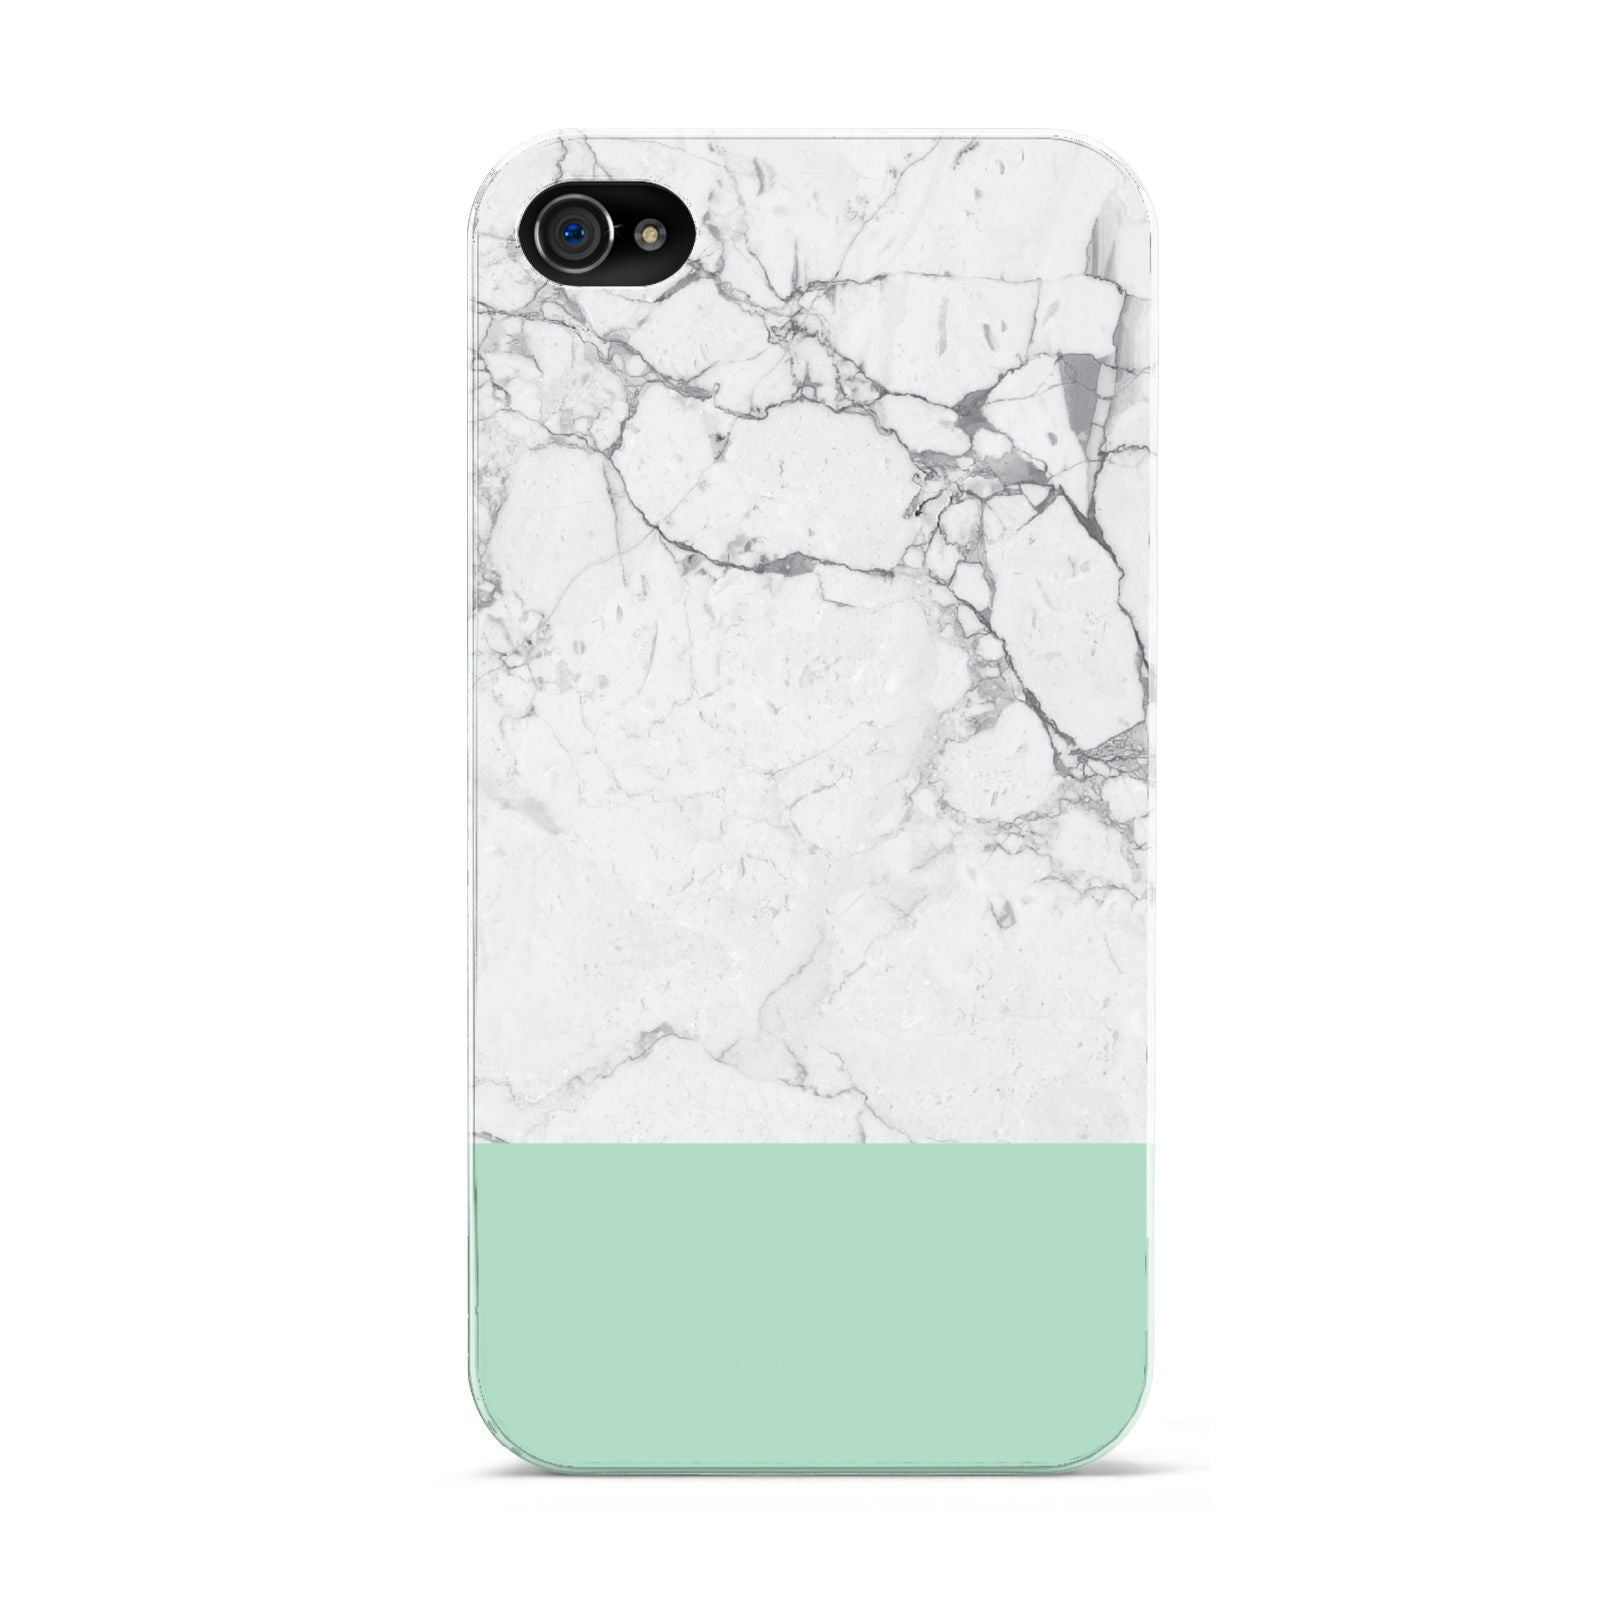 Marble White Carrara Green Apple iPhone 4s Case